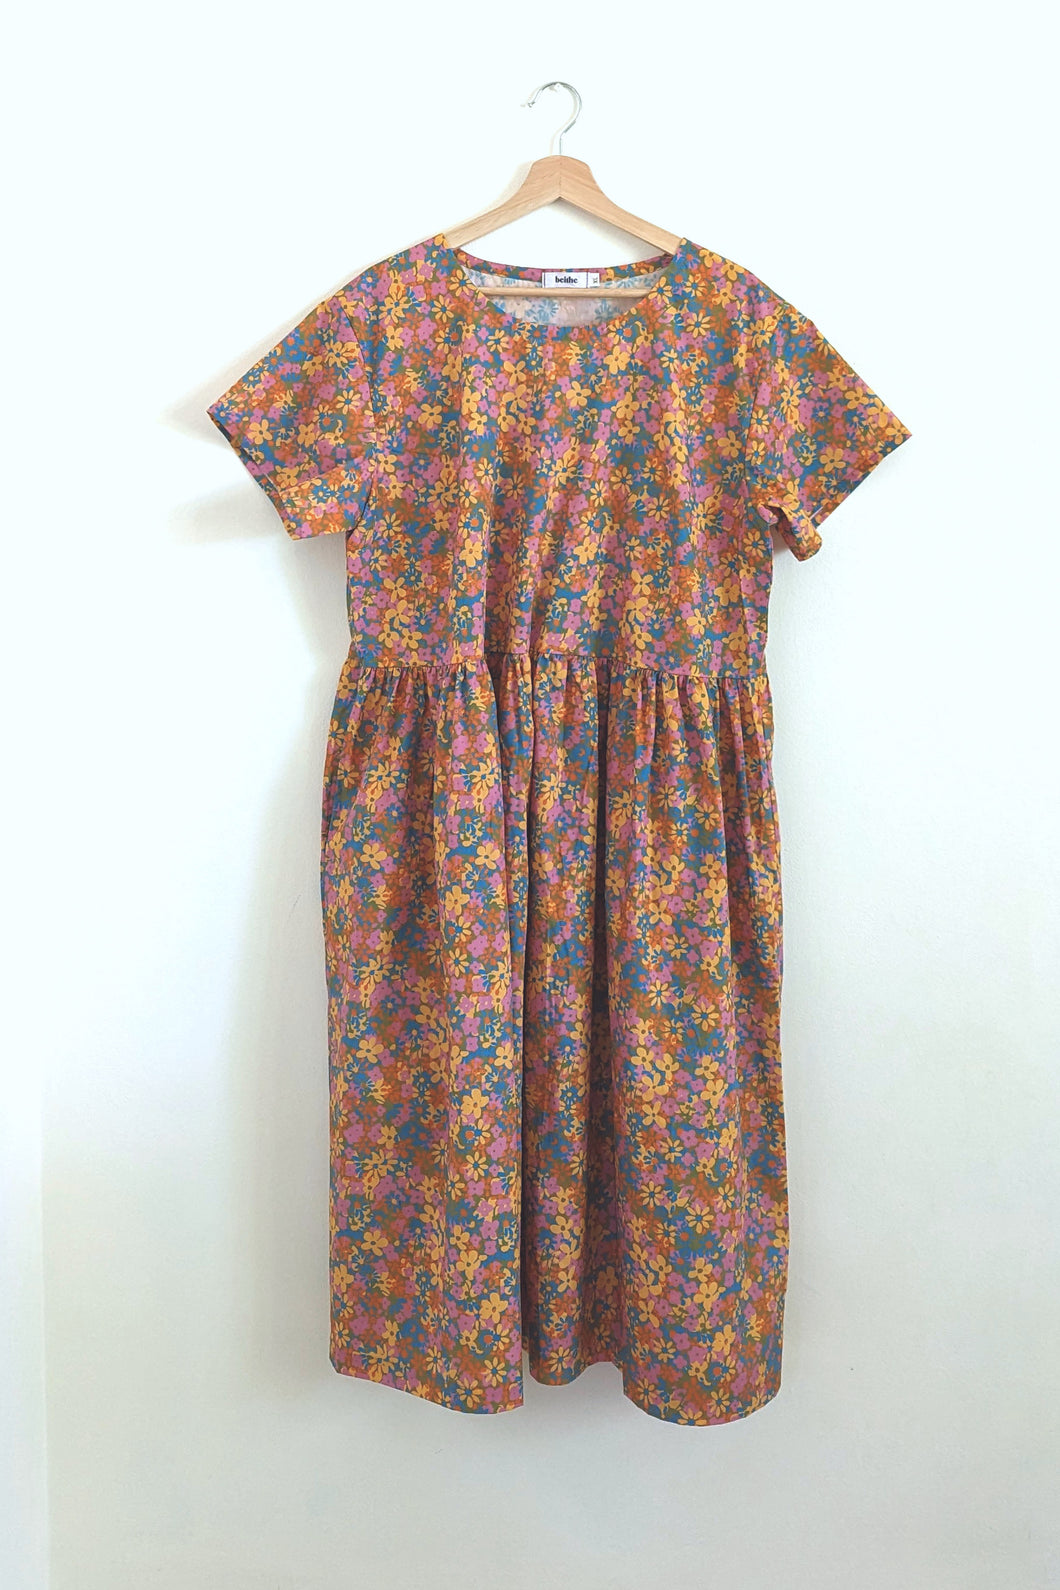 Daisy Organic Cotton Dress - Retro Floral (size XL)